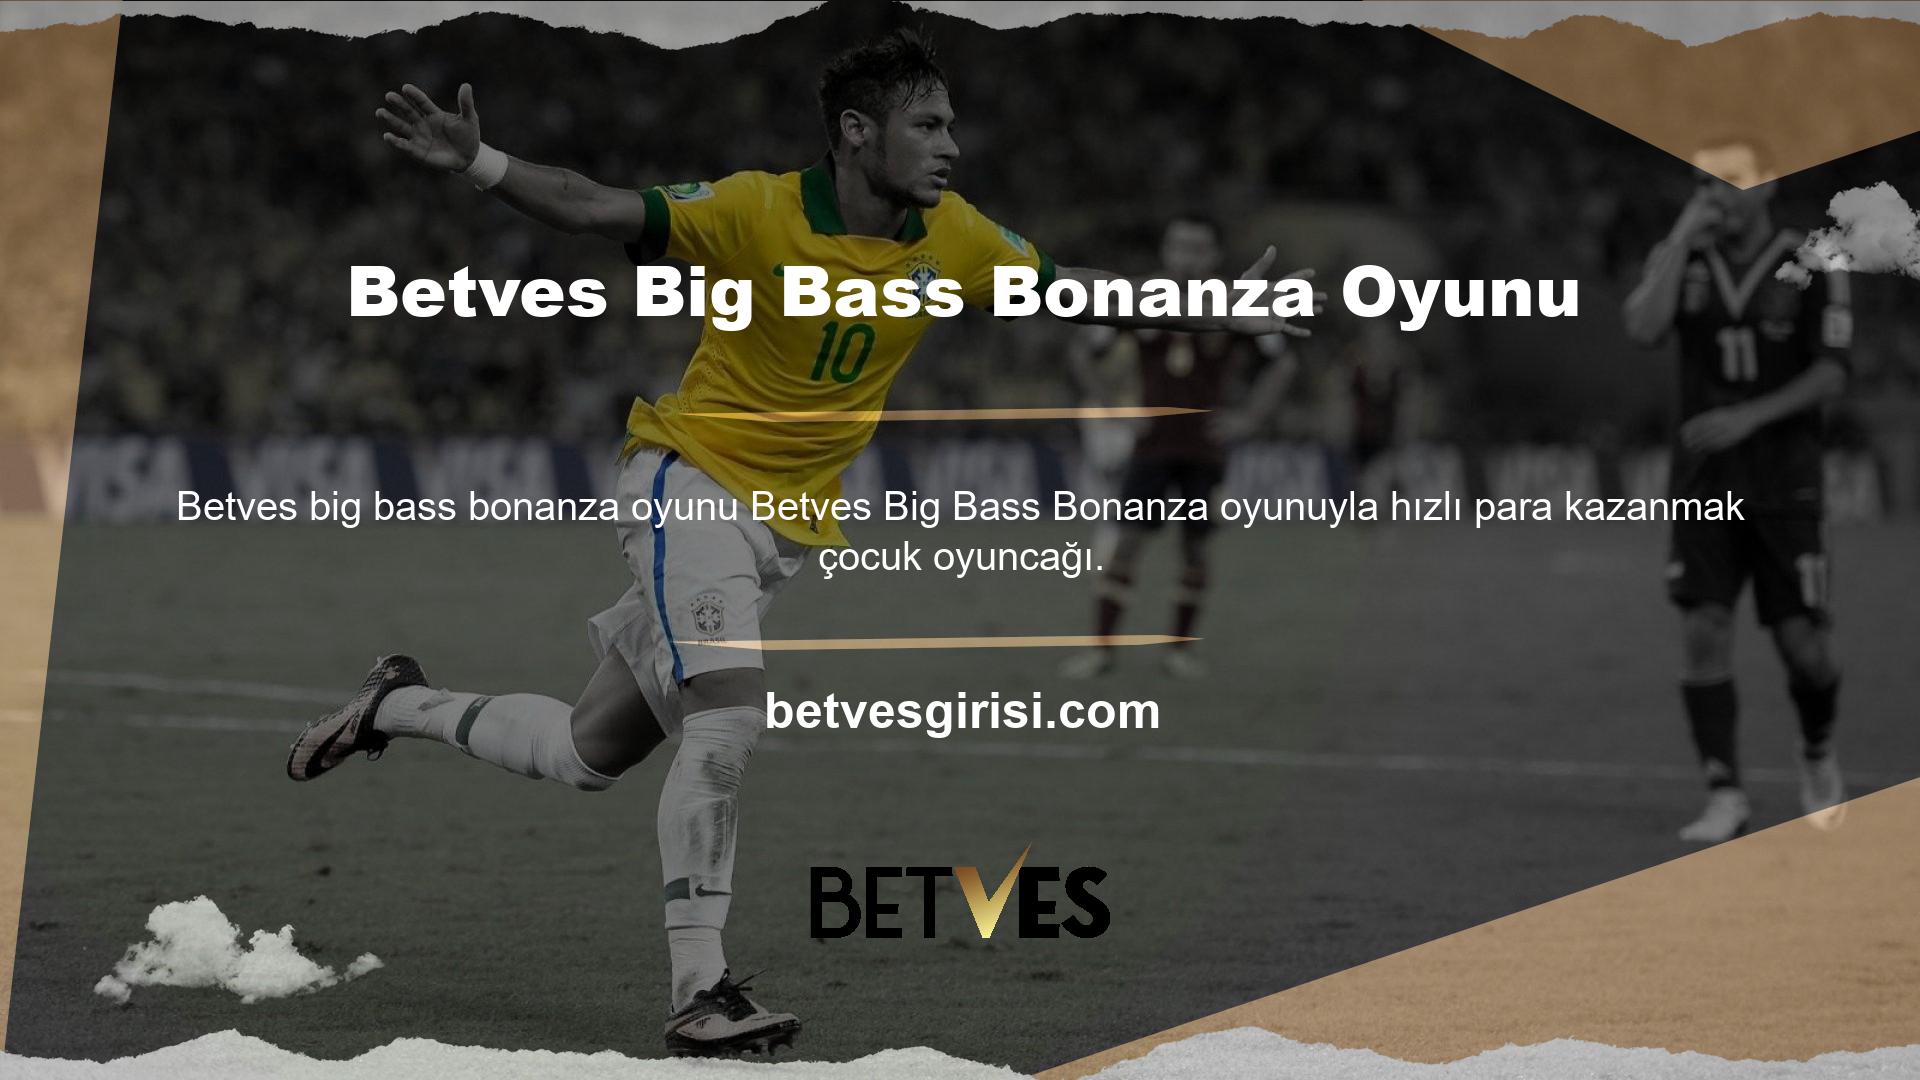 Betves Big Bass Bonanza oyunu aslında basittir